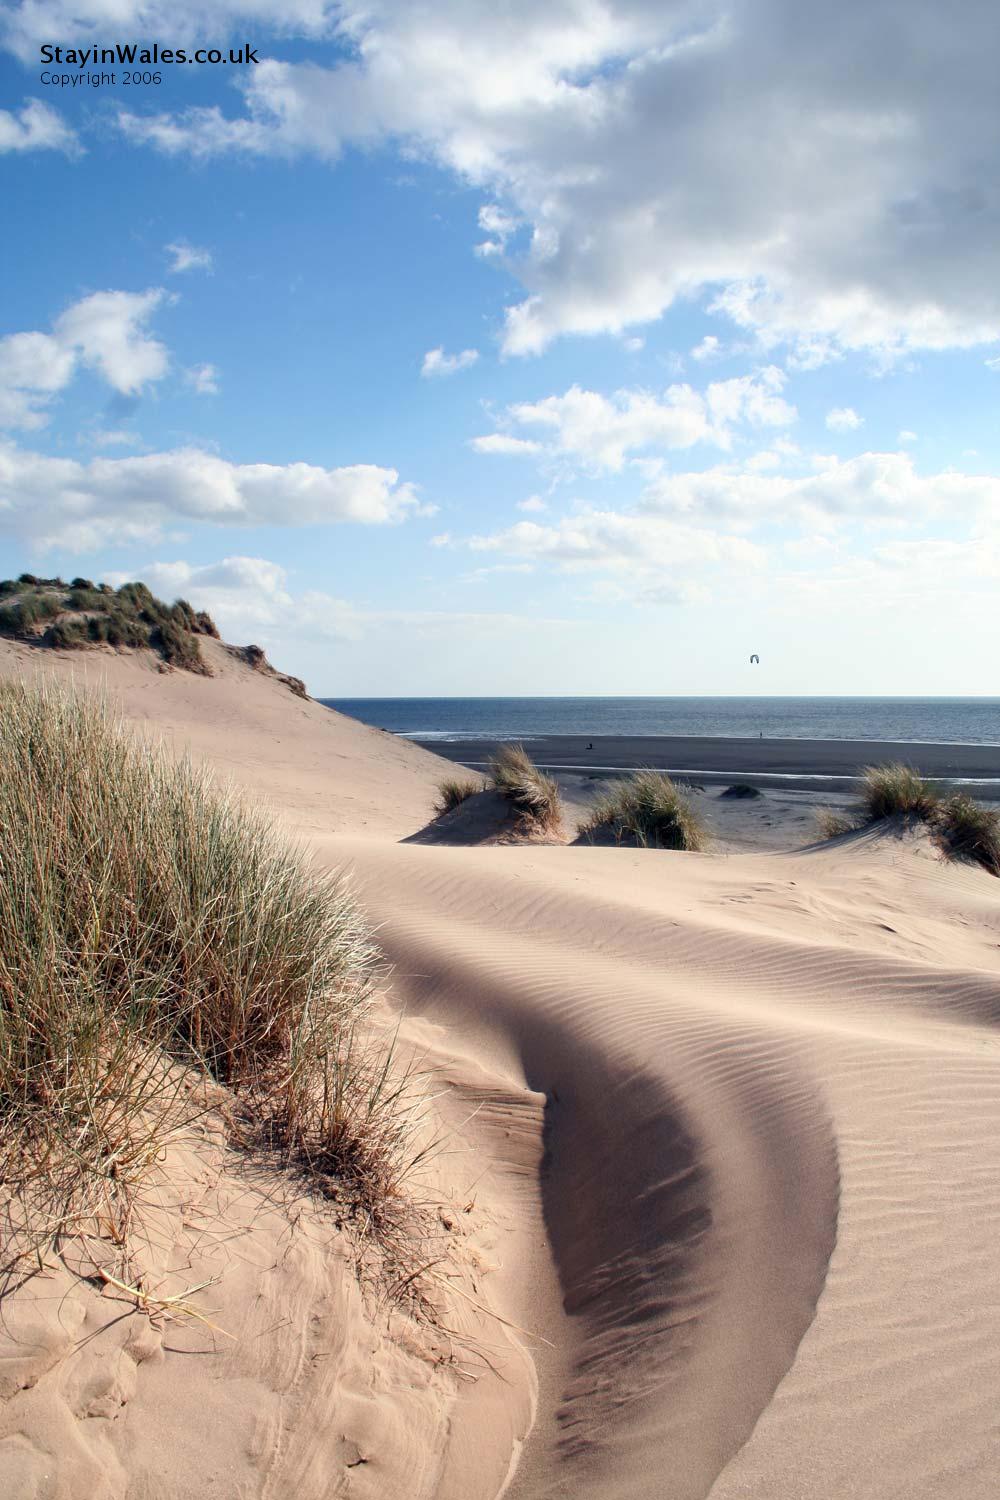 Shell Island sand dunes